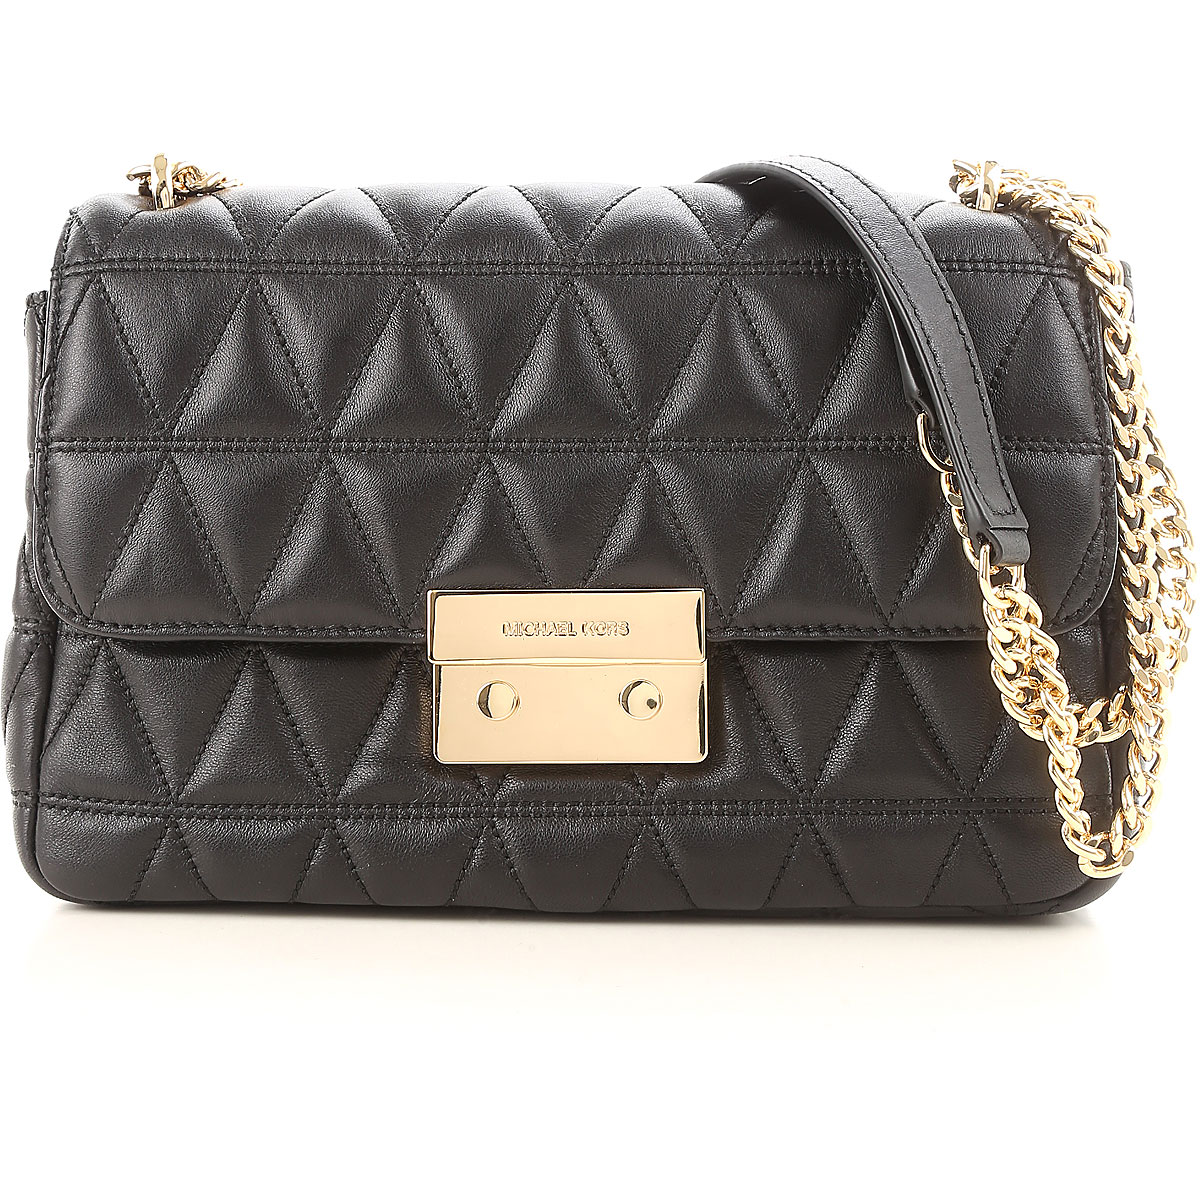 Handbags Michael Kors, Style code: 30s7gsll3l-001-oro